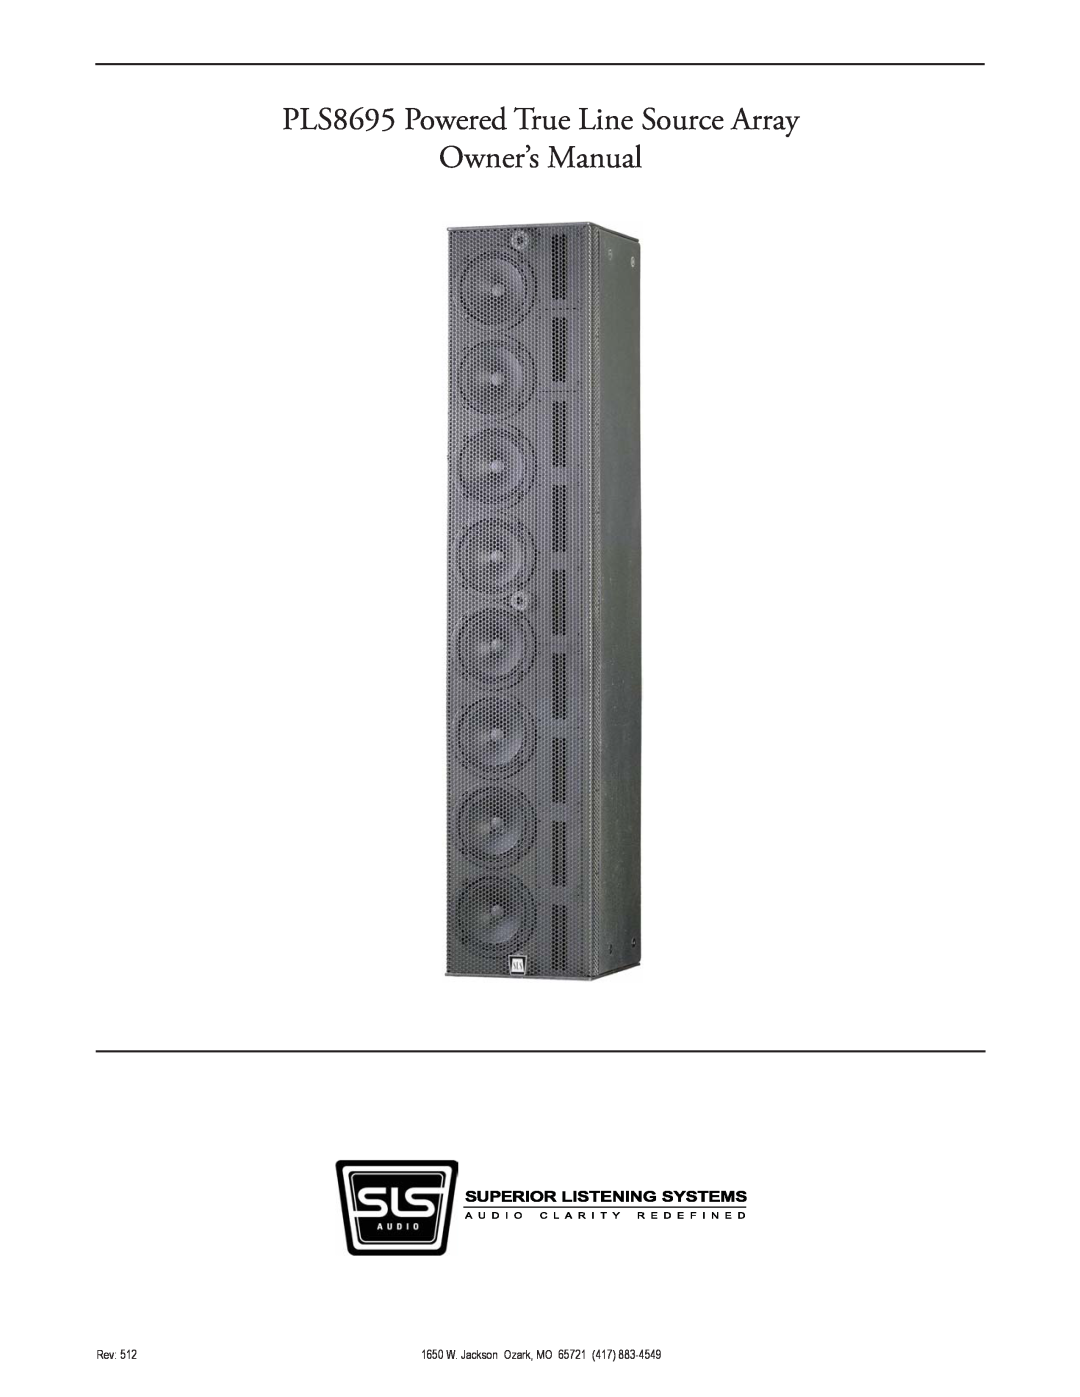 SLS Audio owner manual PLS8695 Powered True Line Source Array, Rev, 1650 W. Jackson Ozark, MO 